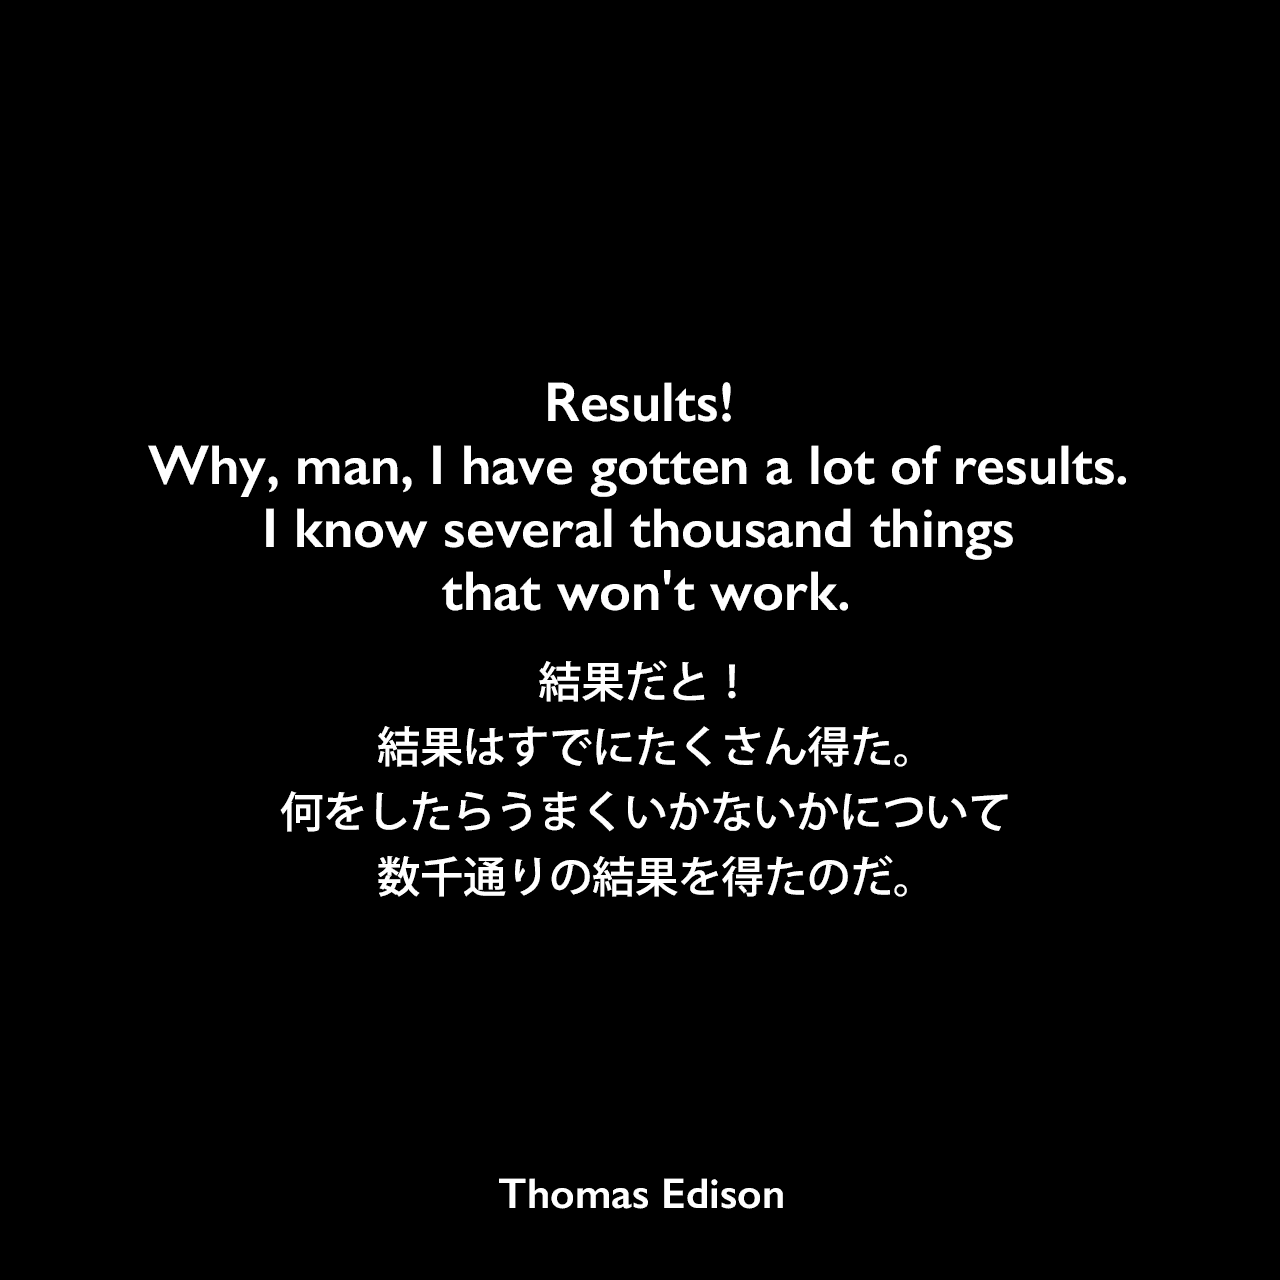 Results! Why, man, I have gotten a lot of results. I know several thousand things that won't work.結果だと！結果はすでにたくさん得た。何をしたらうまくいかないかについて数千通りの結果を得たのだ。Thomas Edison